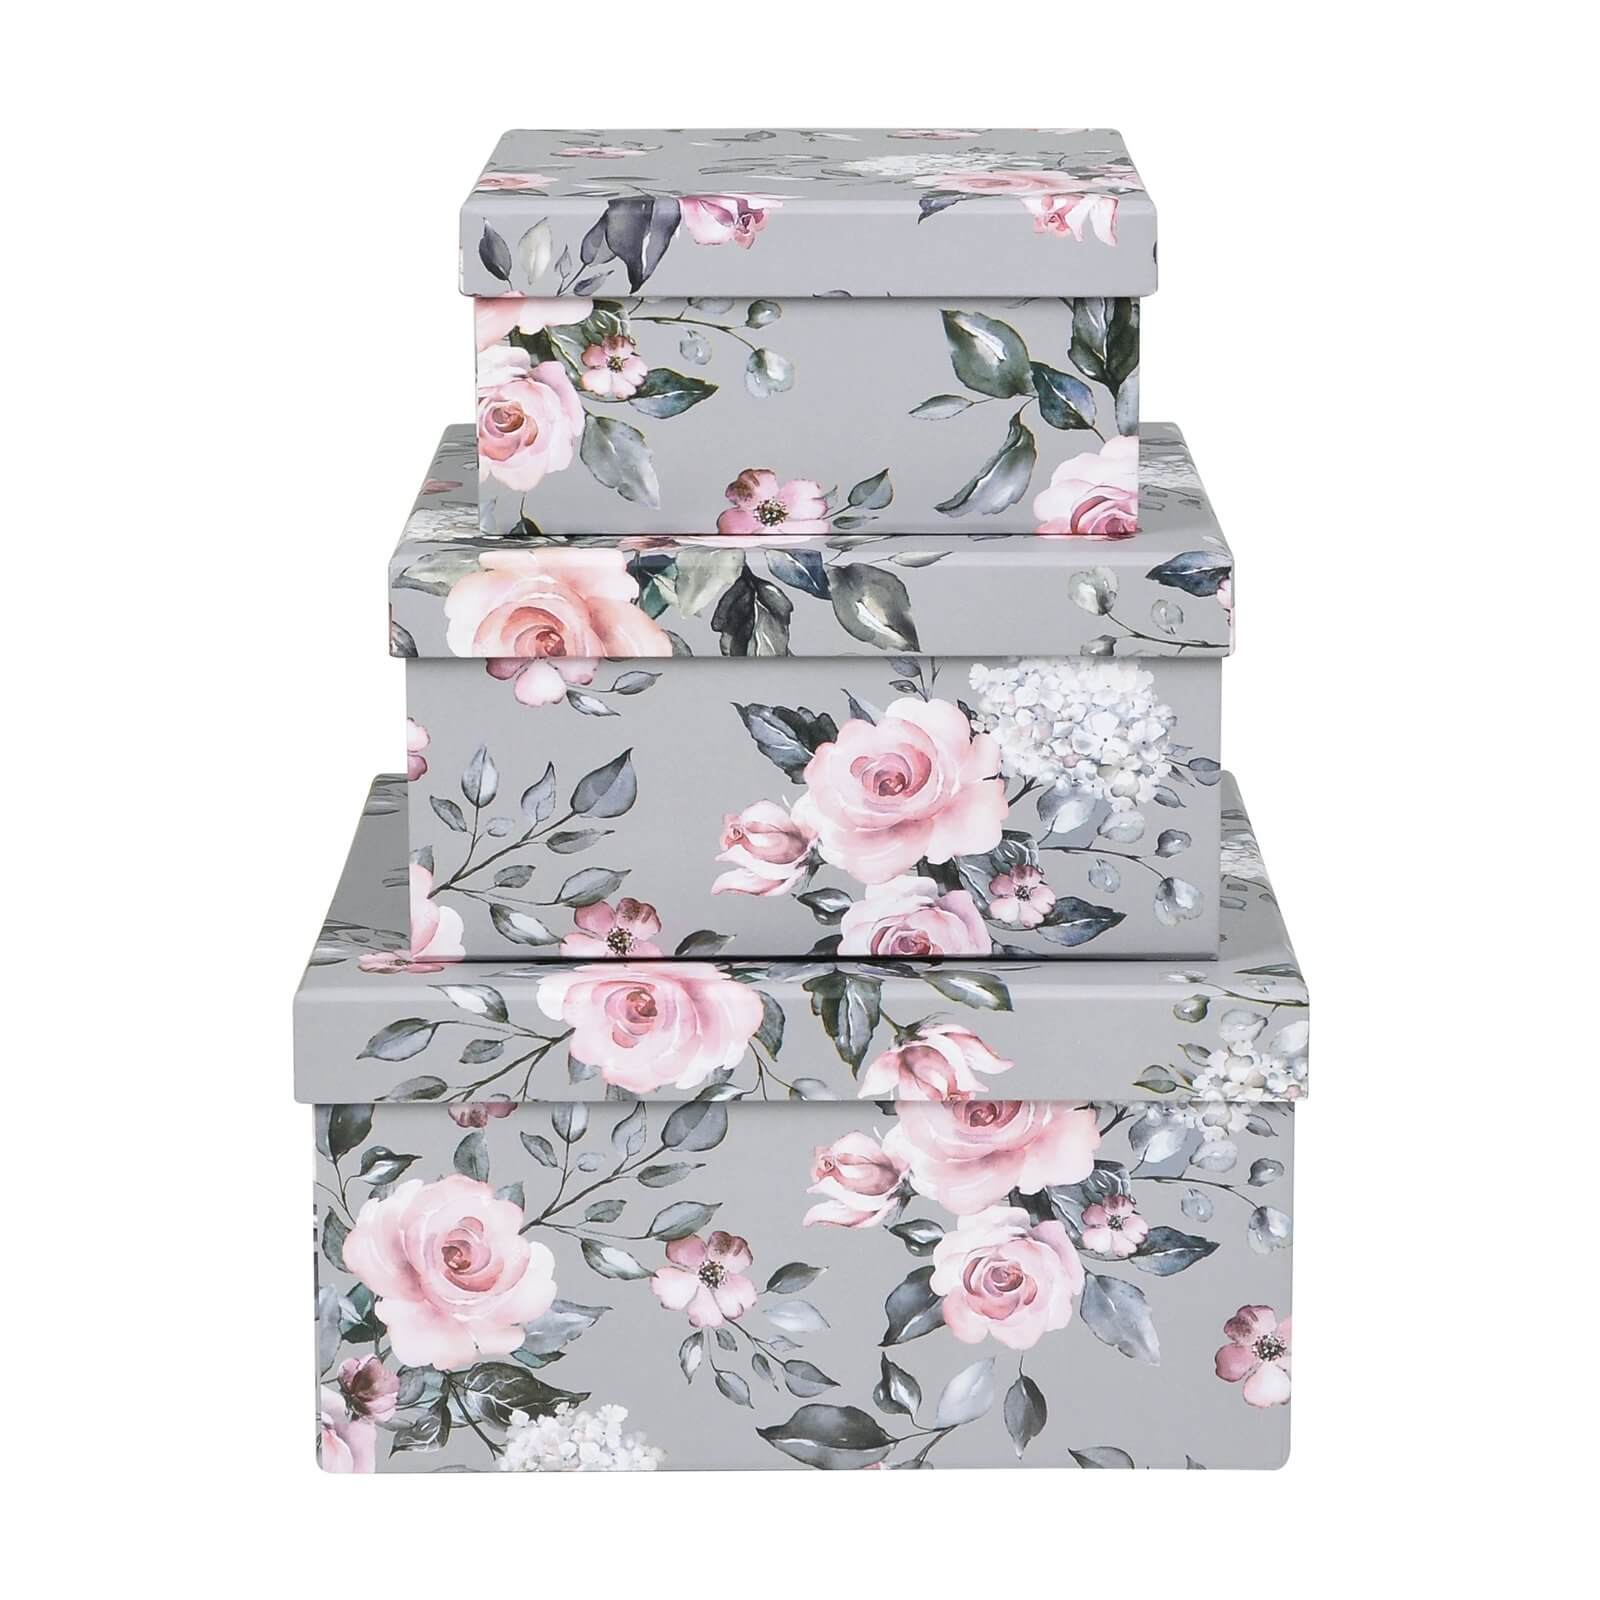 Floral Cardboard Storage Boxes - Set of 3